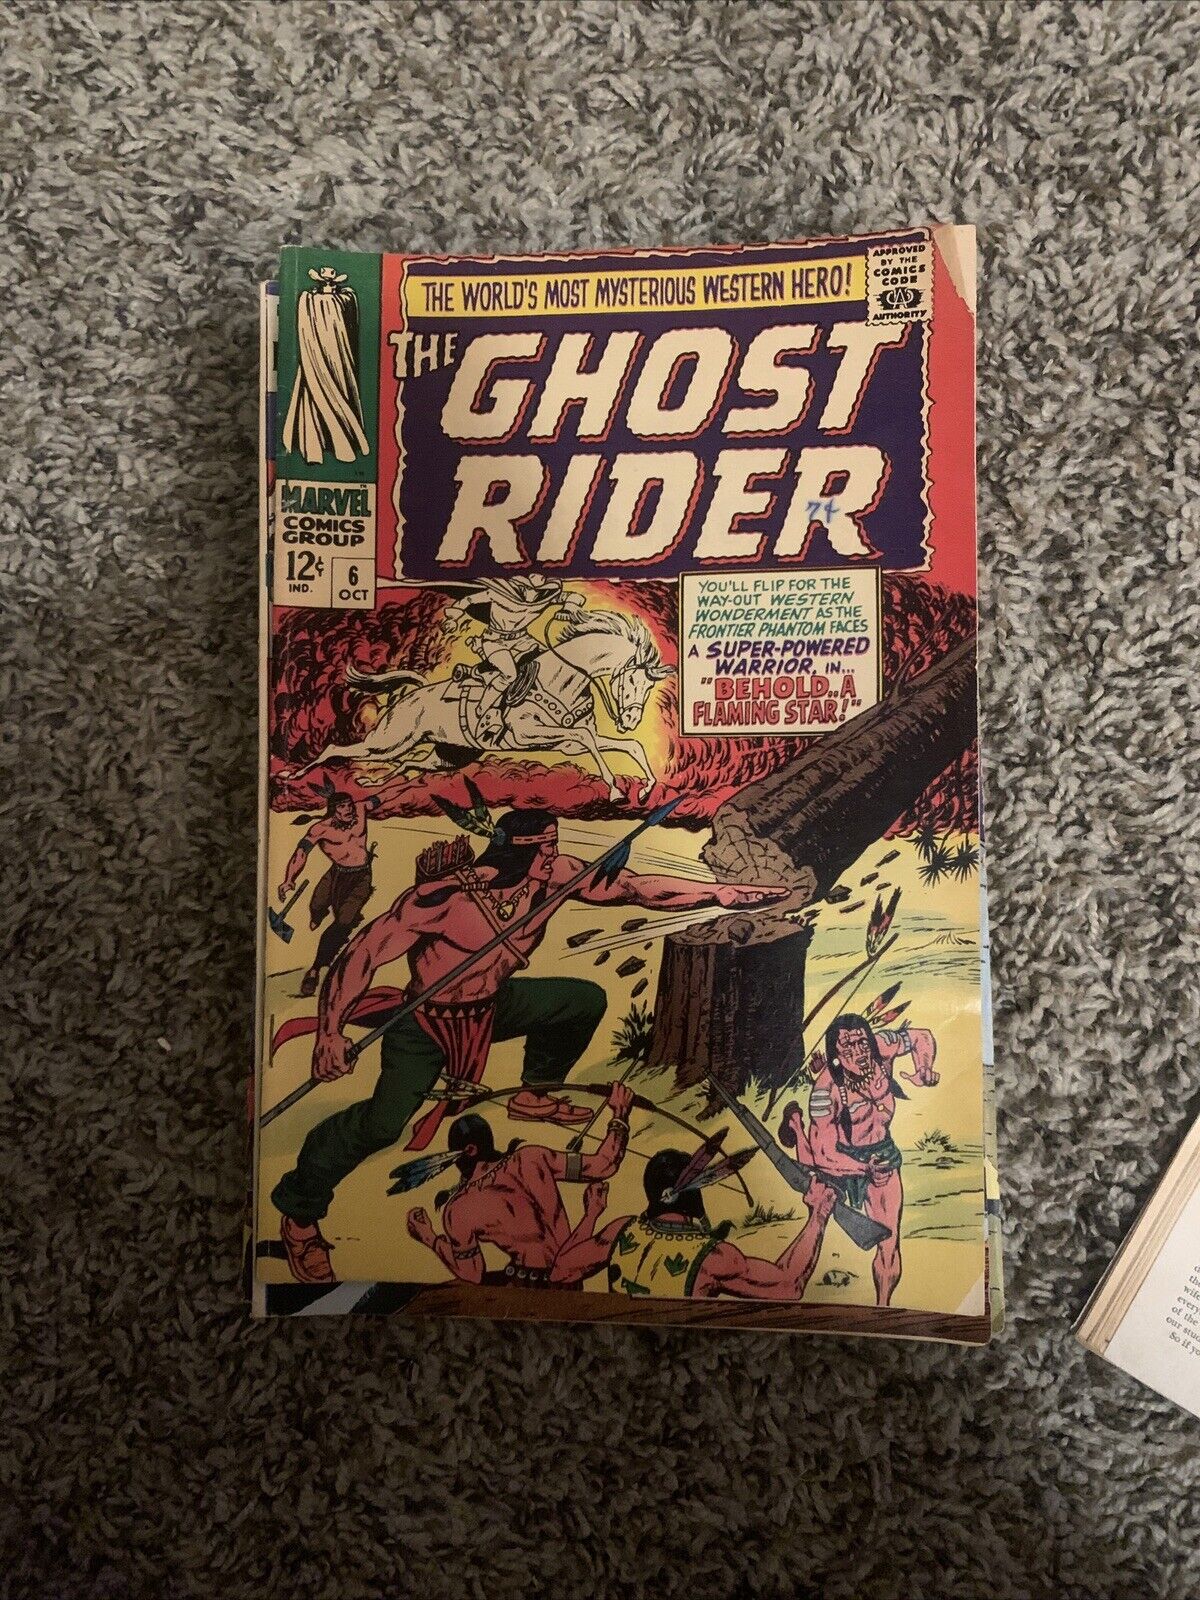 Marvel Comics The Ghost Rider Vol.1, 6 Oct 1967.